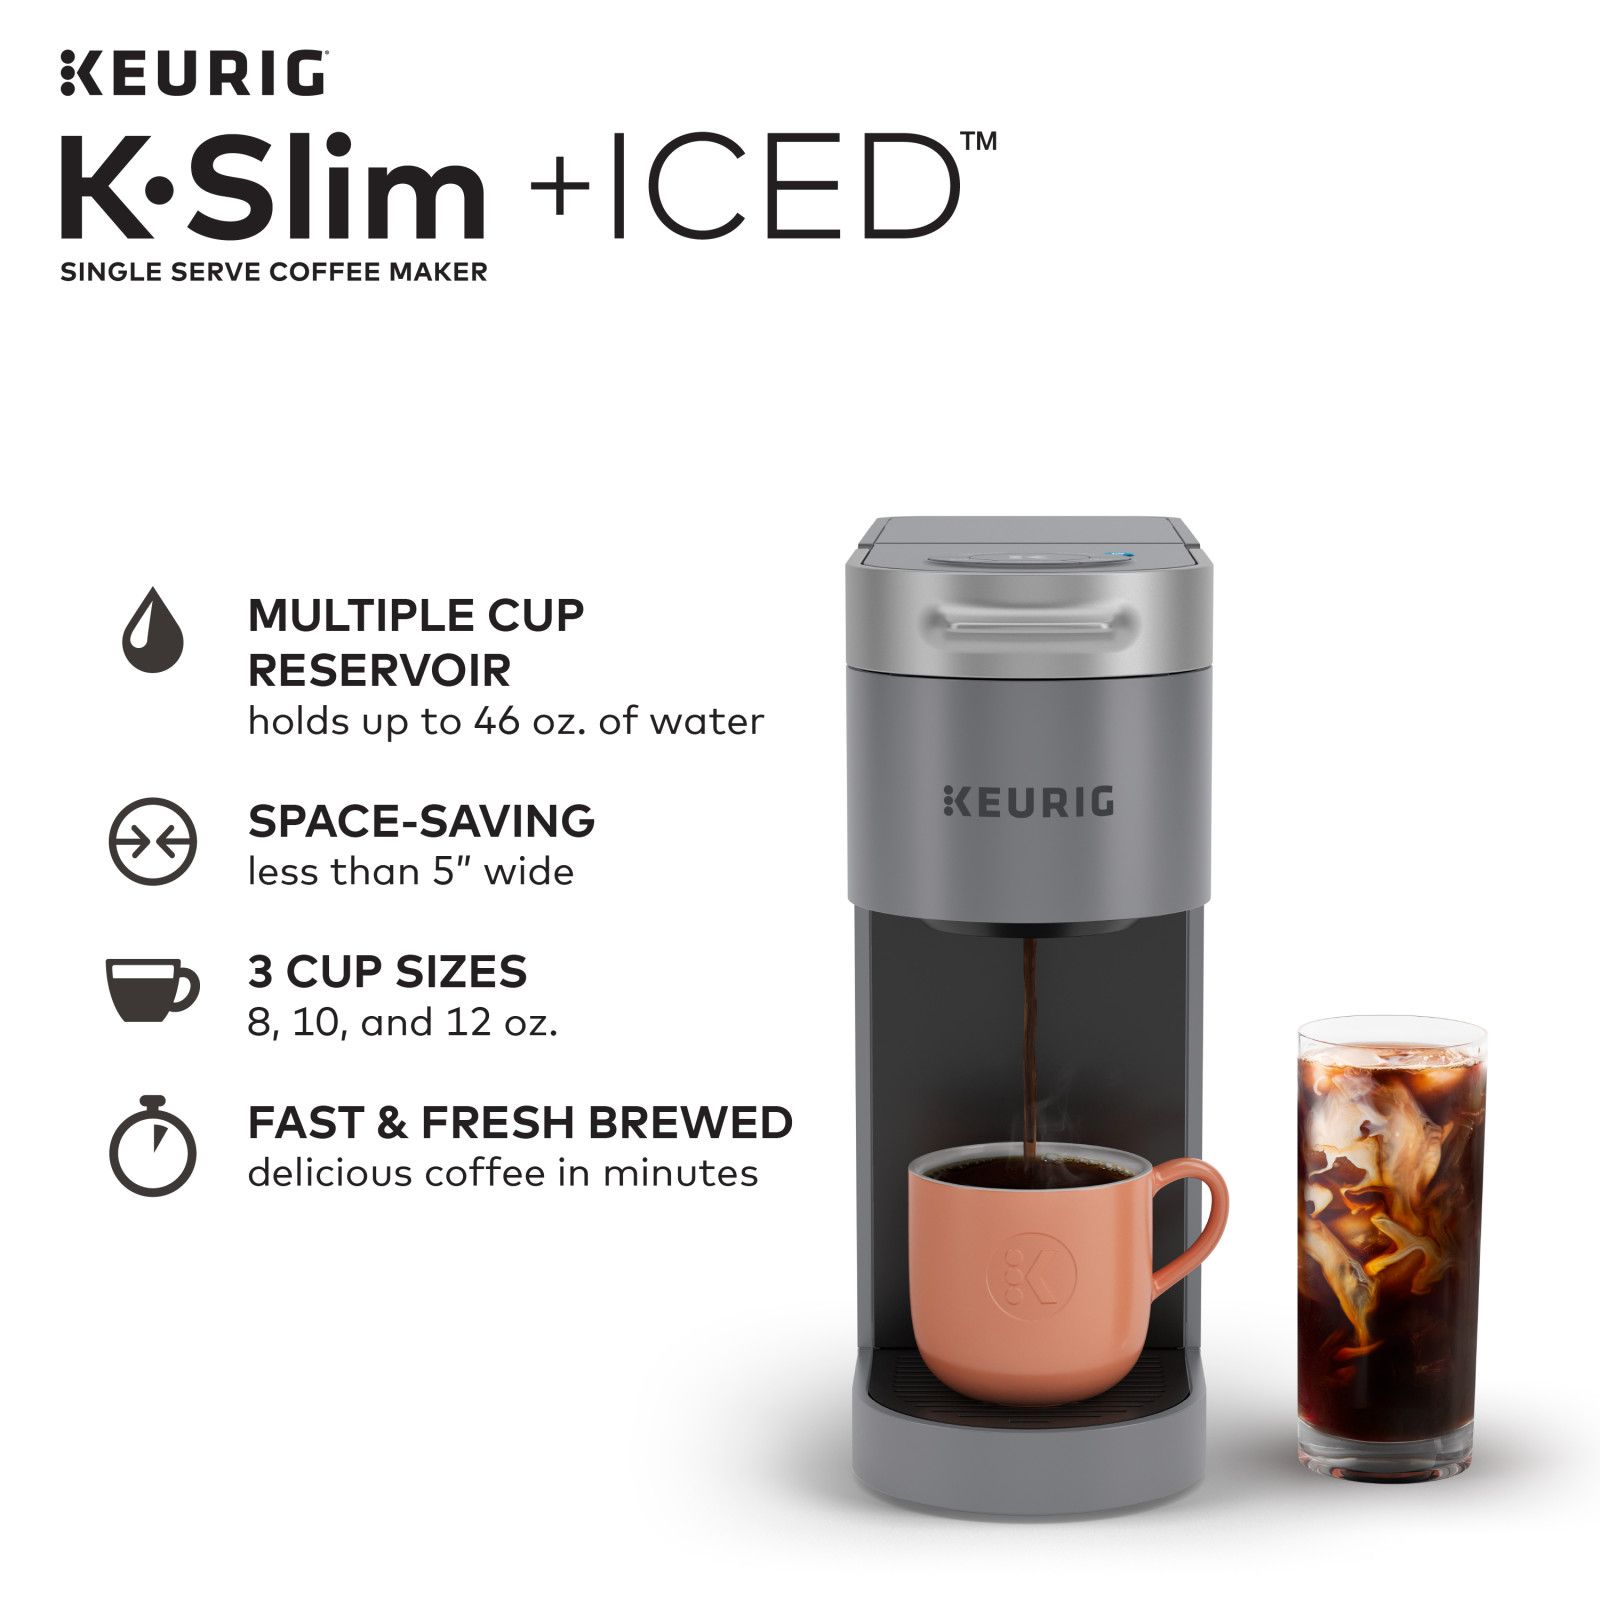 Keurig K-Iced Single Serve Coffee Maker, Arctic Gray